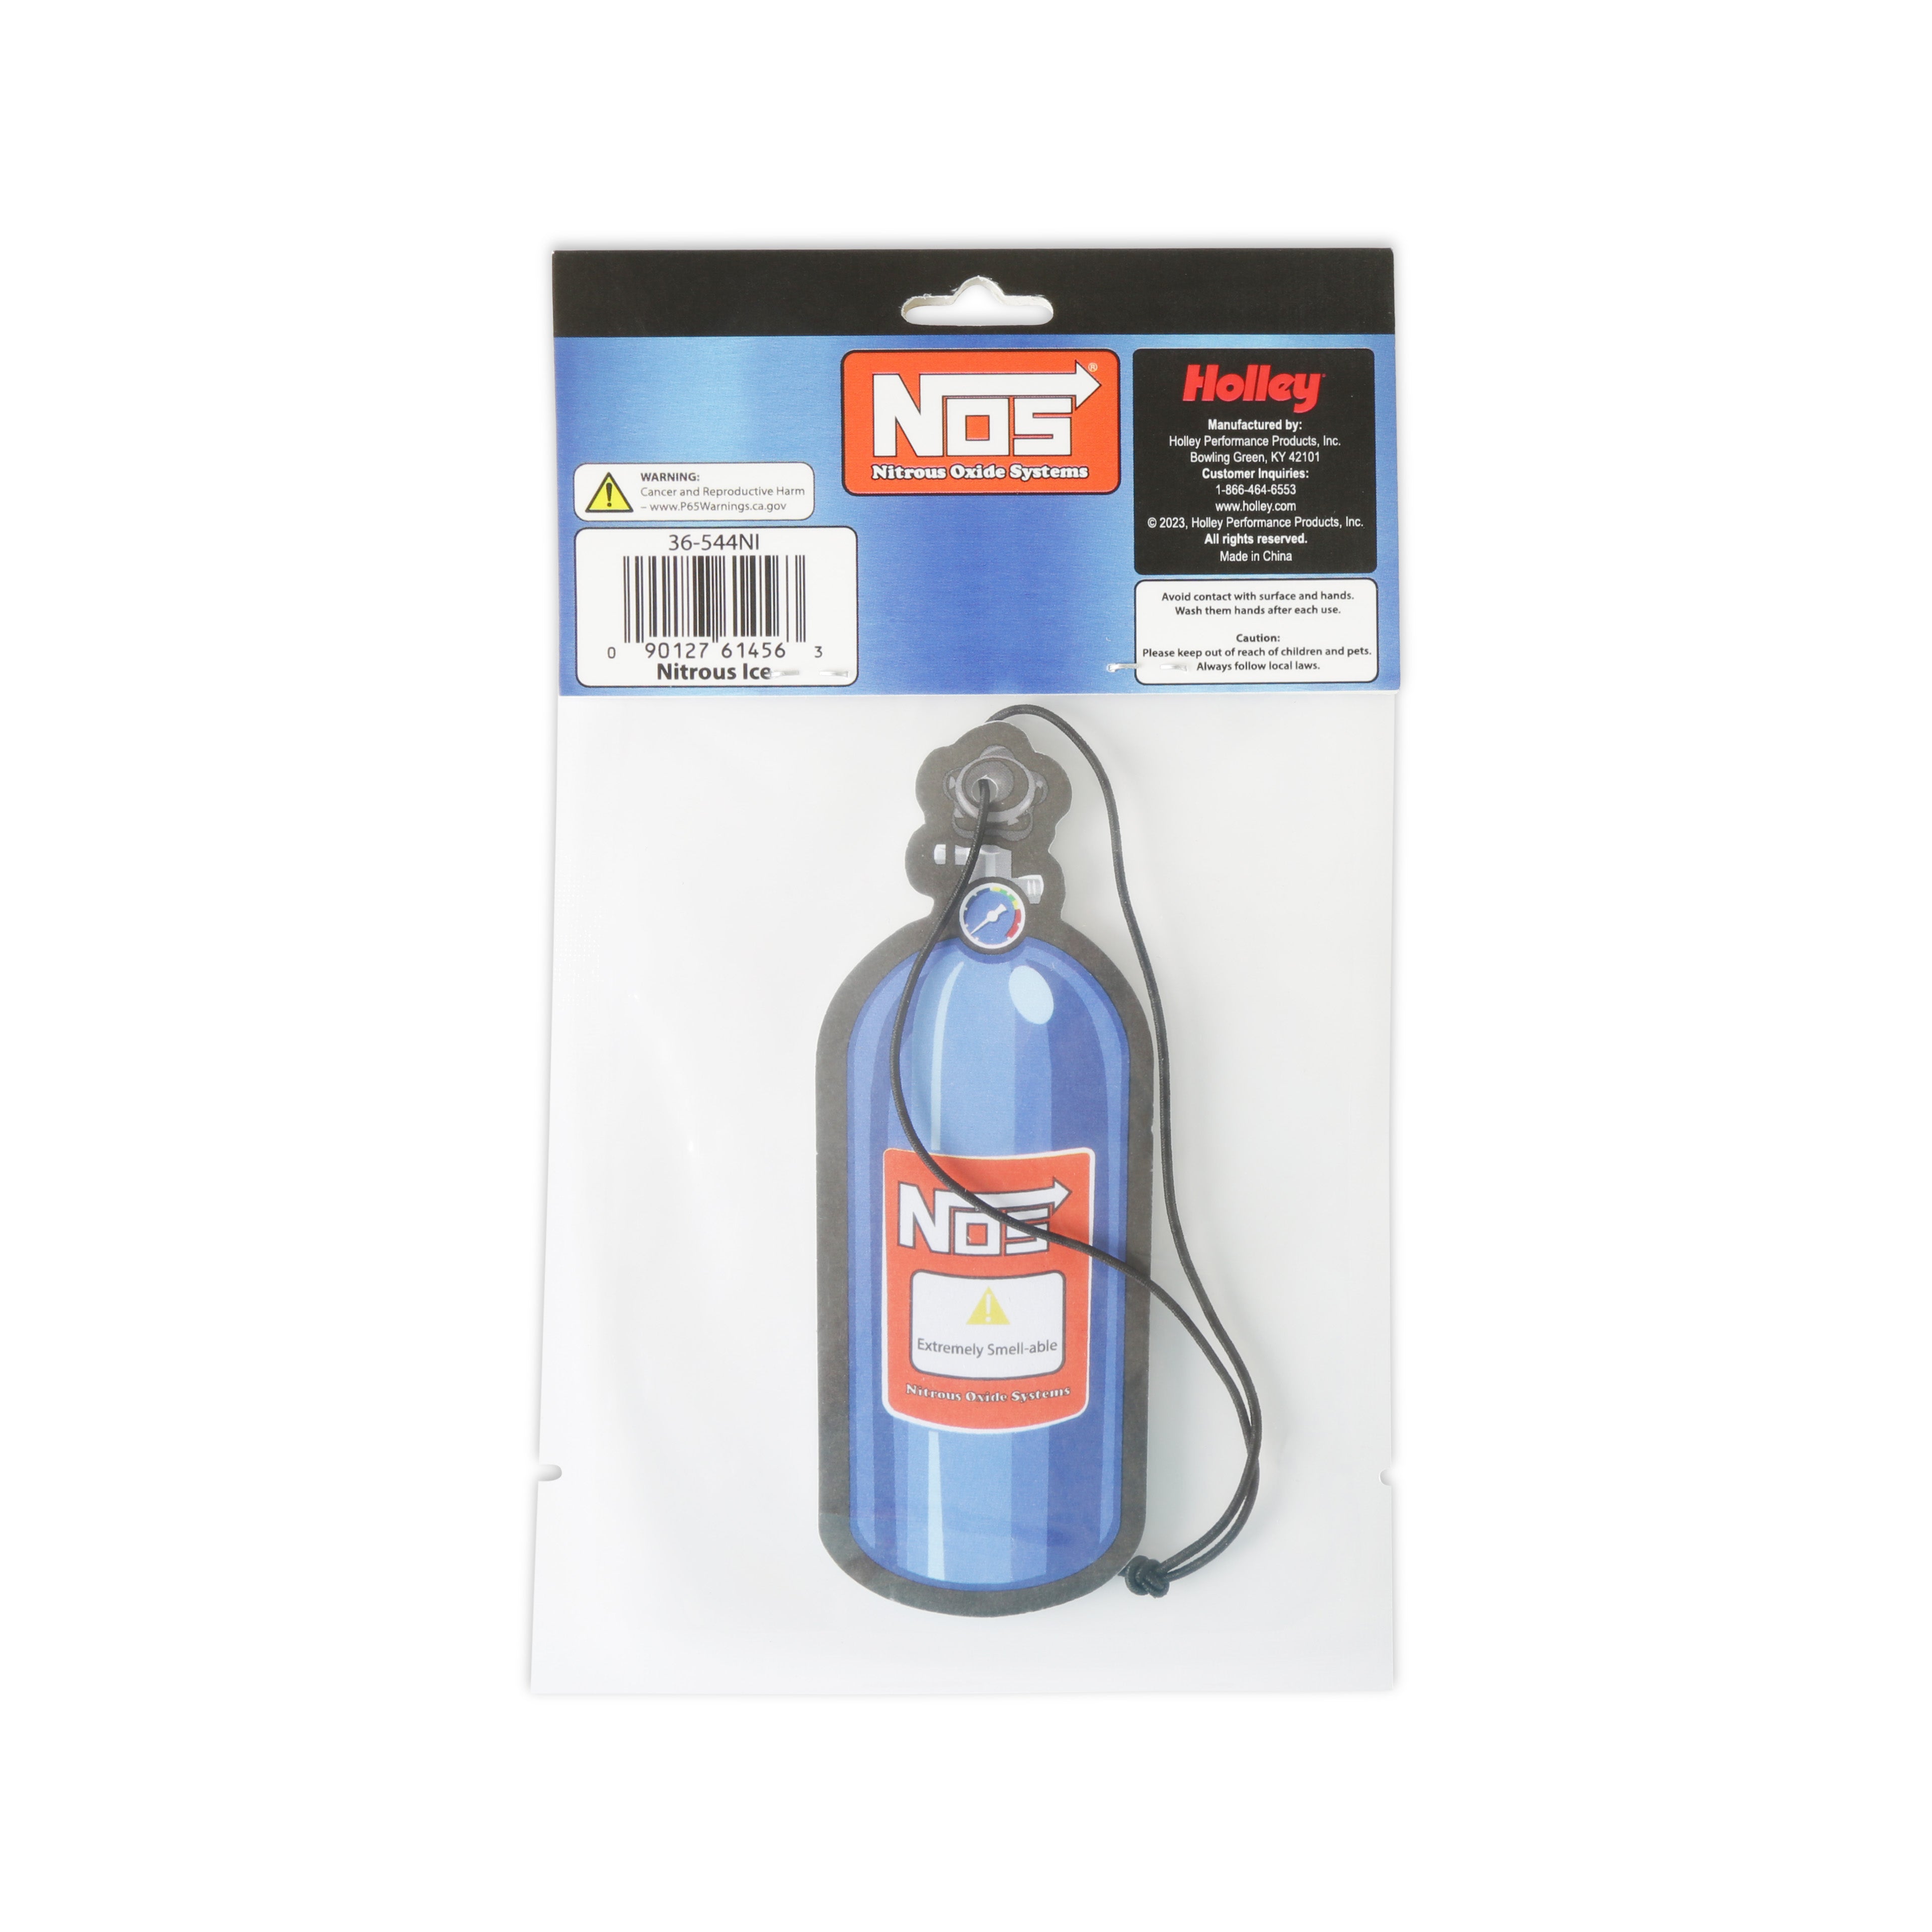 NOS/Nitrous Oxide System Air Freshener 36-544NI